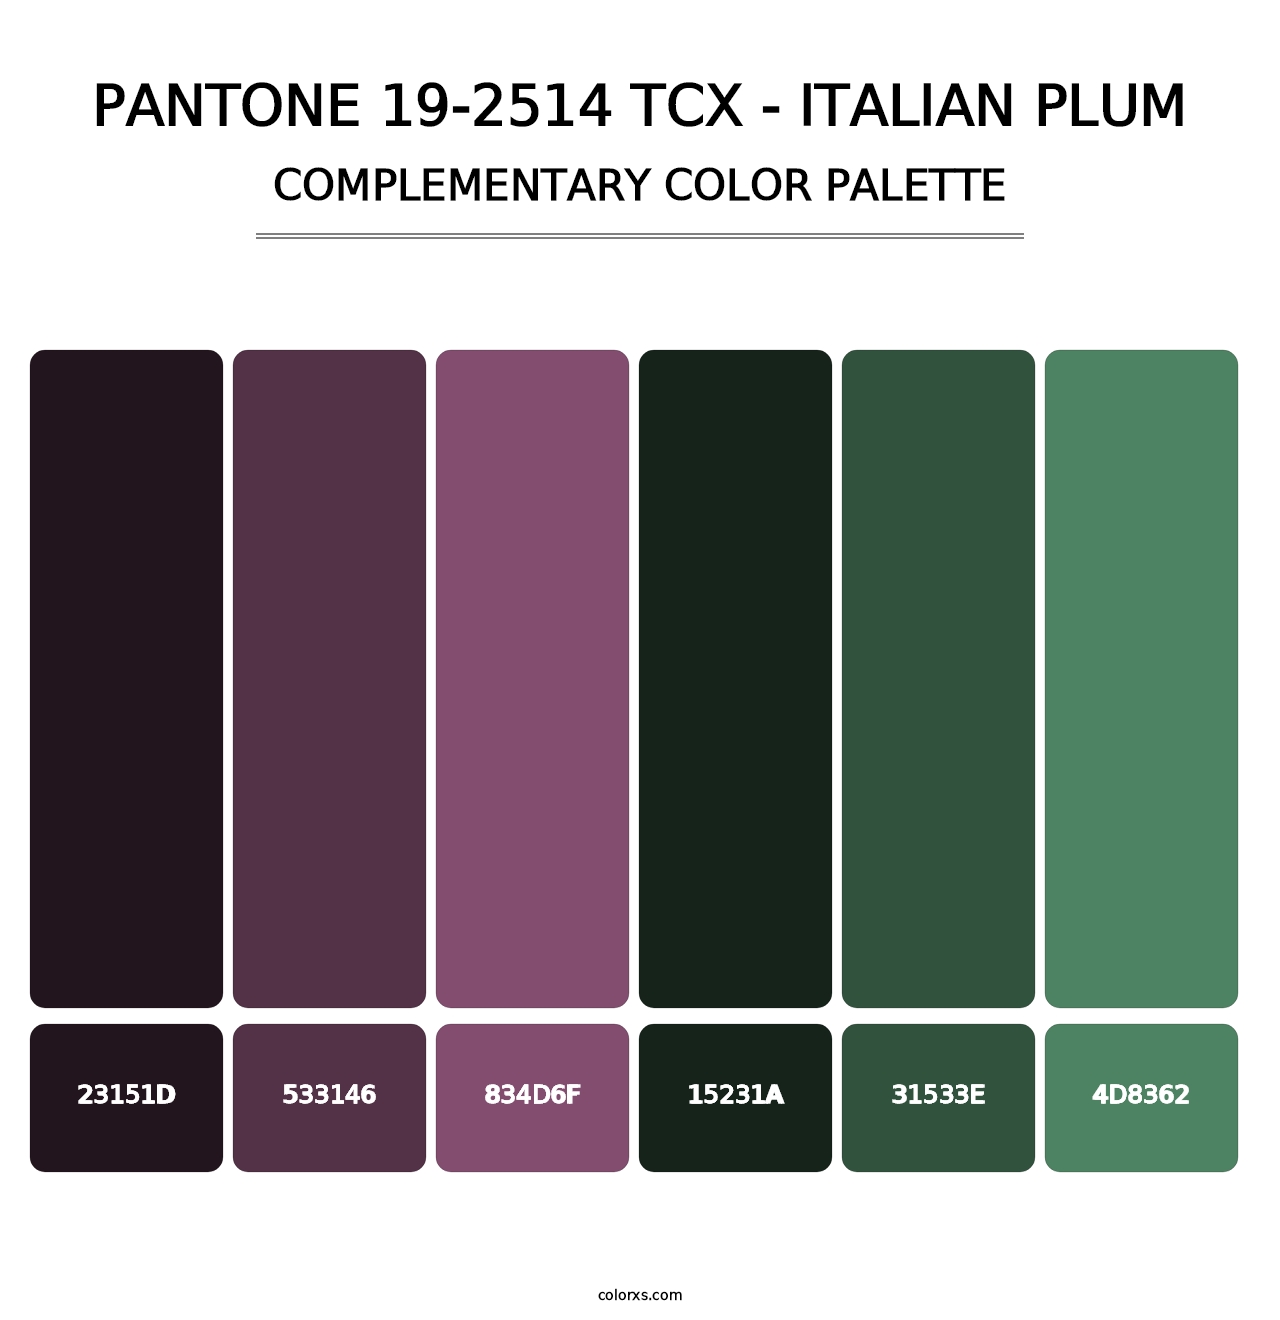 PANTONE 19-2514 TCX - Italian Plum - Complementary Color Palette